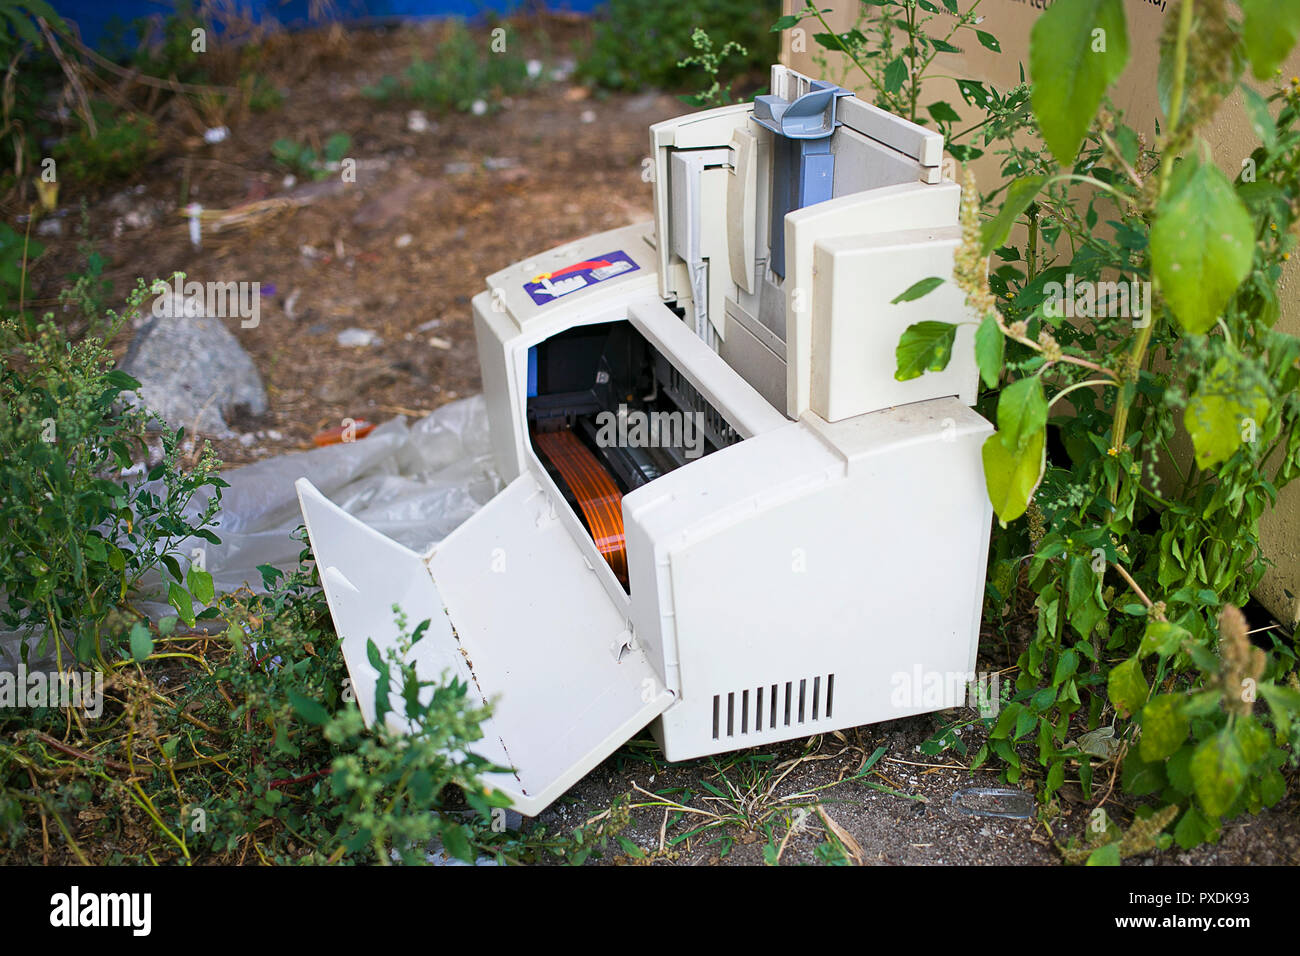 white broken printer left on the corner of the street as electronic trash Stock Photo